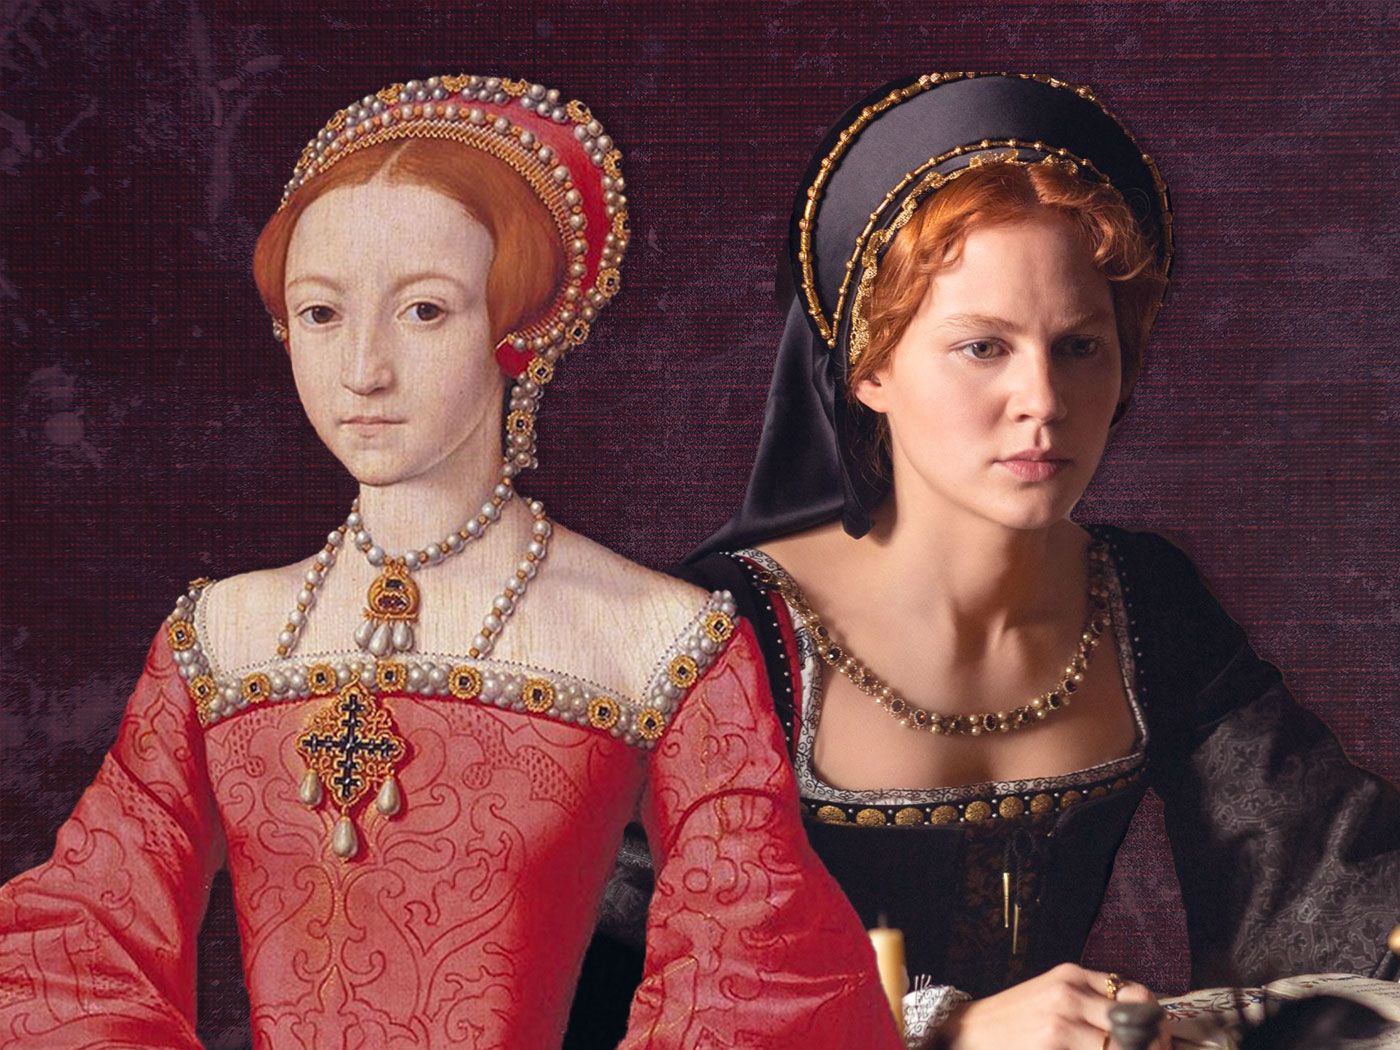 Illustration of Princess Elizabeth and Alicia von Rittenburg as Elizabeth